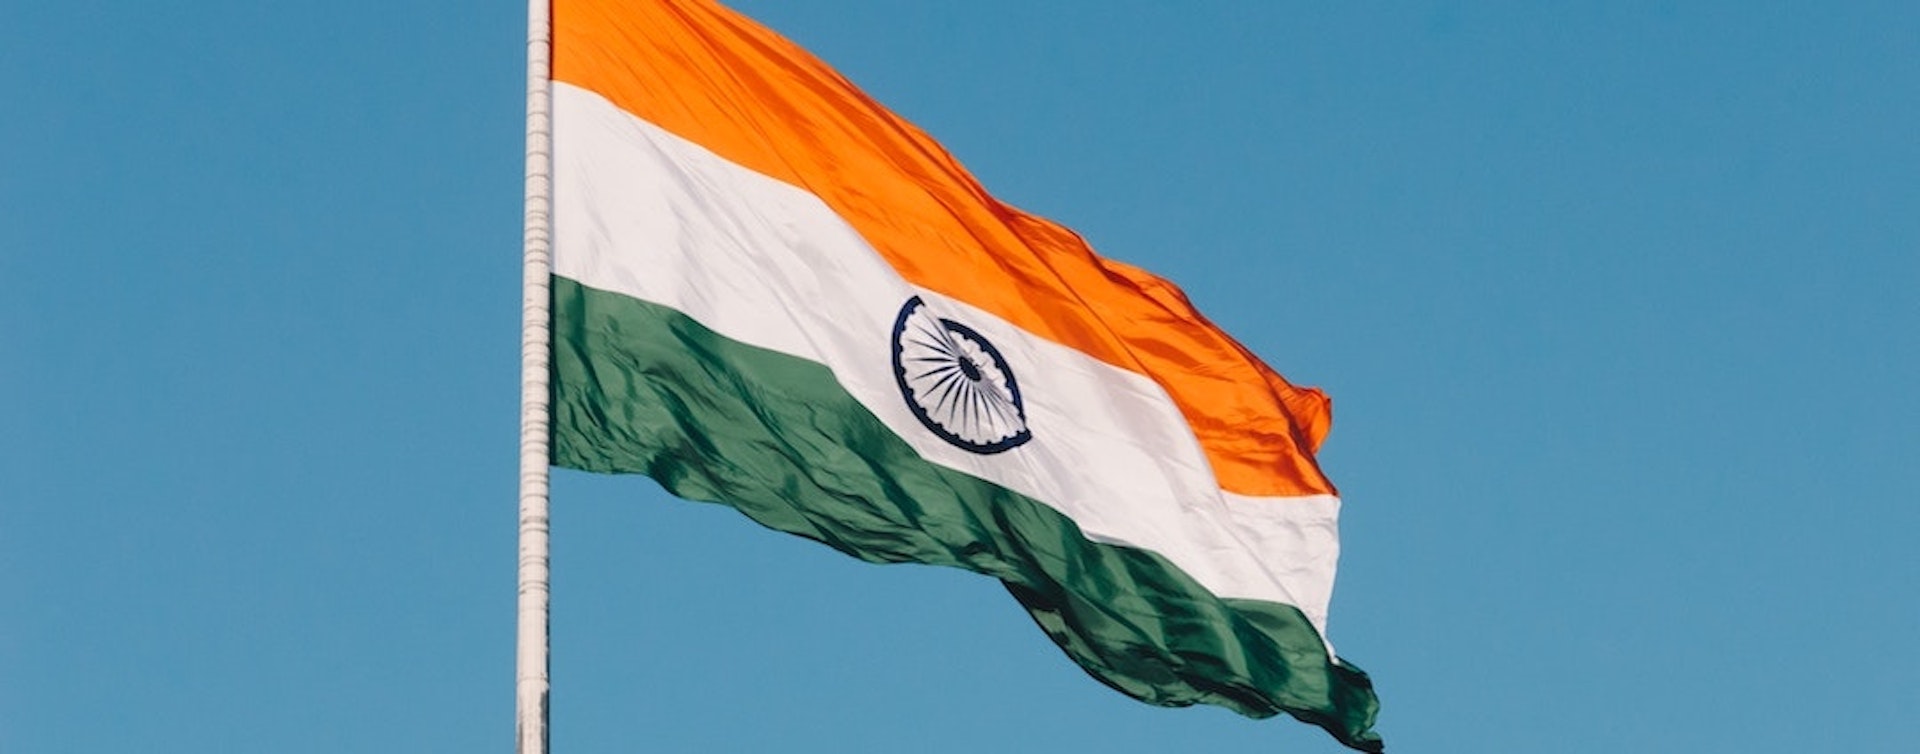 The Indian flag against a blue sky